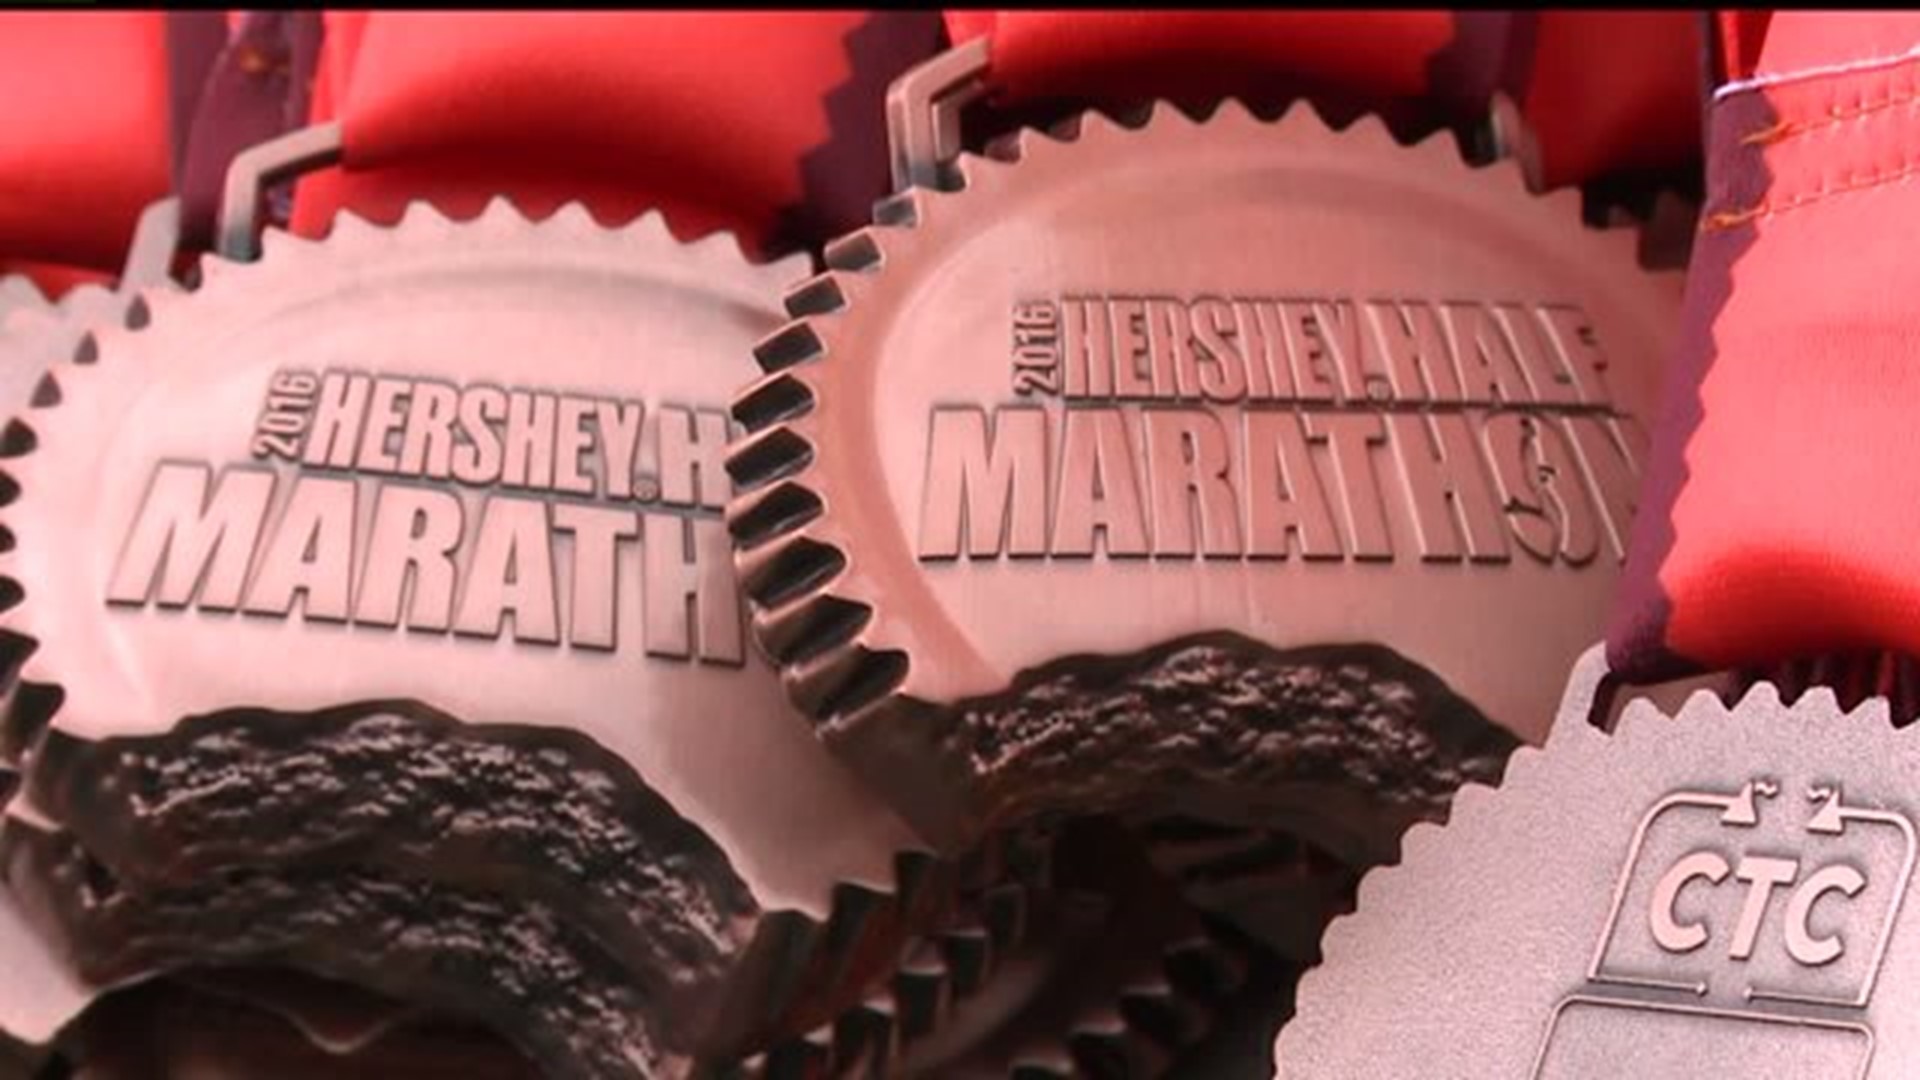 Thousands run half-marathon through the "Sweetest Place on Earth"